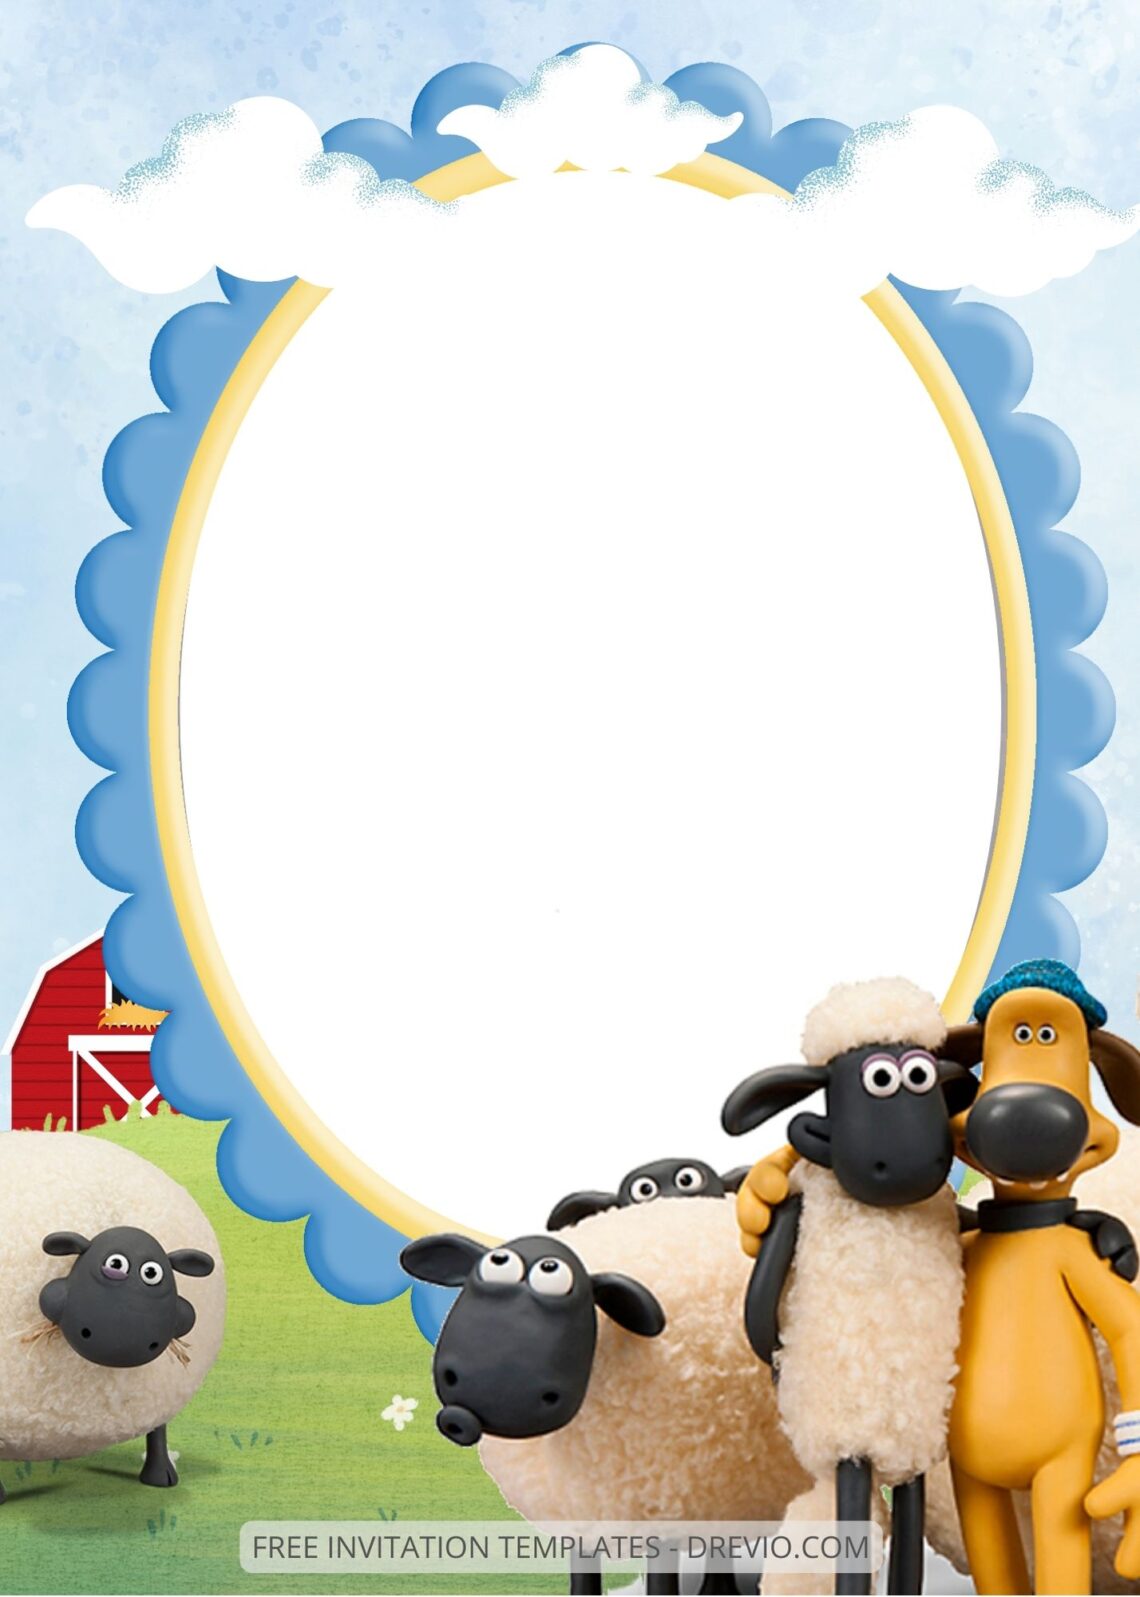 FREE EDITABLE - 9+ Shaun The Sheep Canva Birthday Invitation Templates Nine